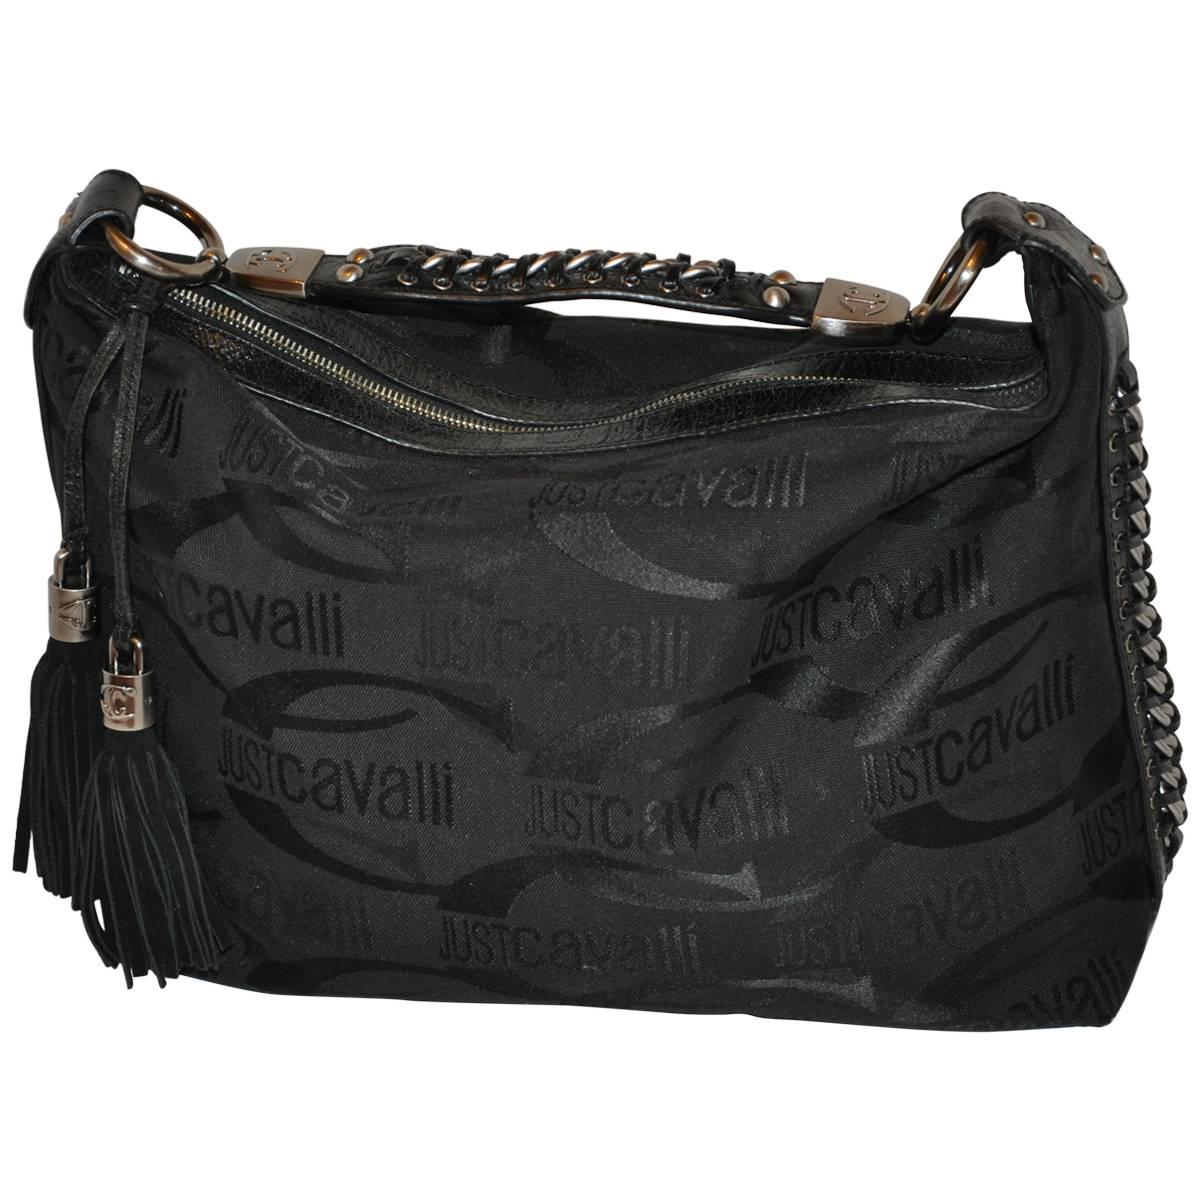 Roberto Cavalli Signature Logo with Hand-Woven and Fringe Pom-Pom Handbag